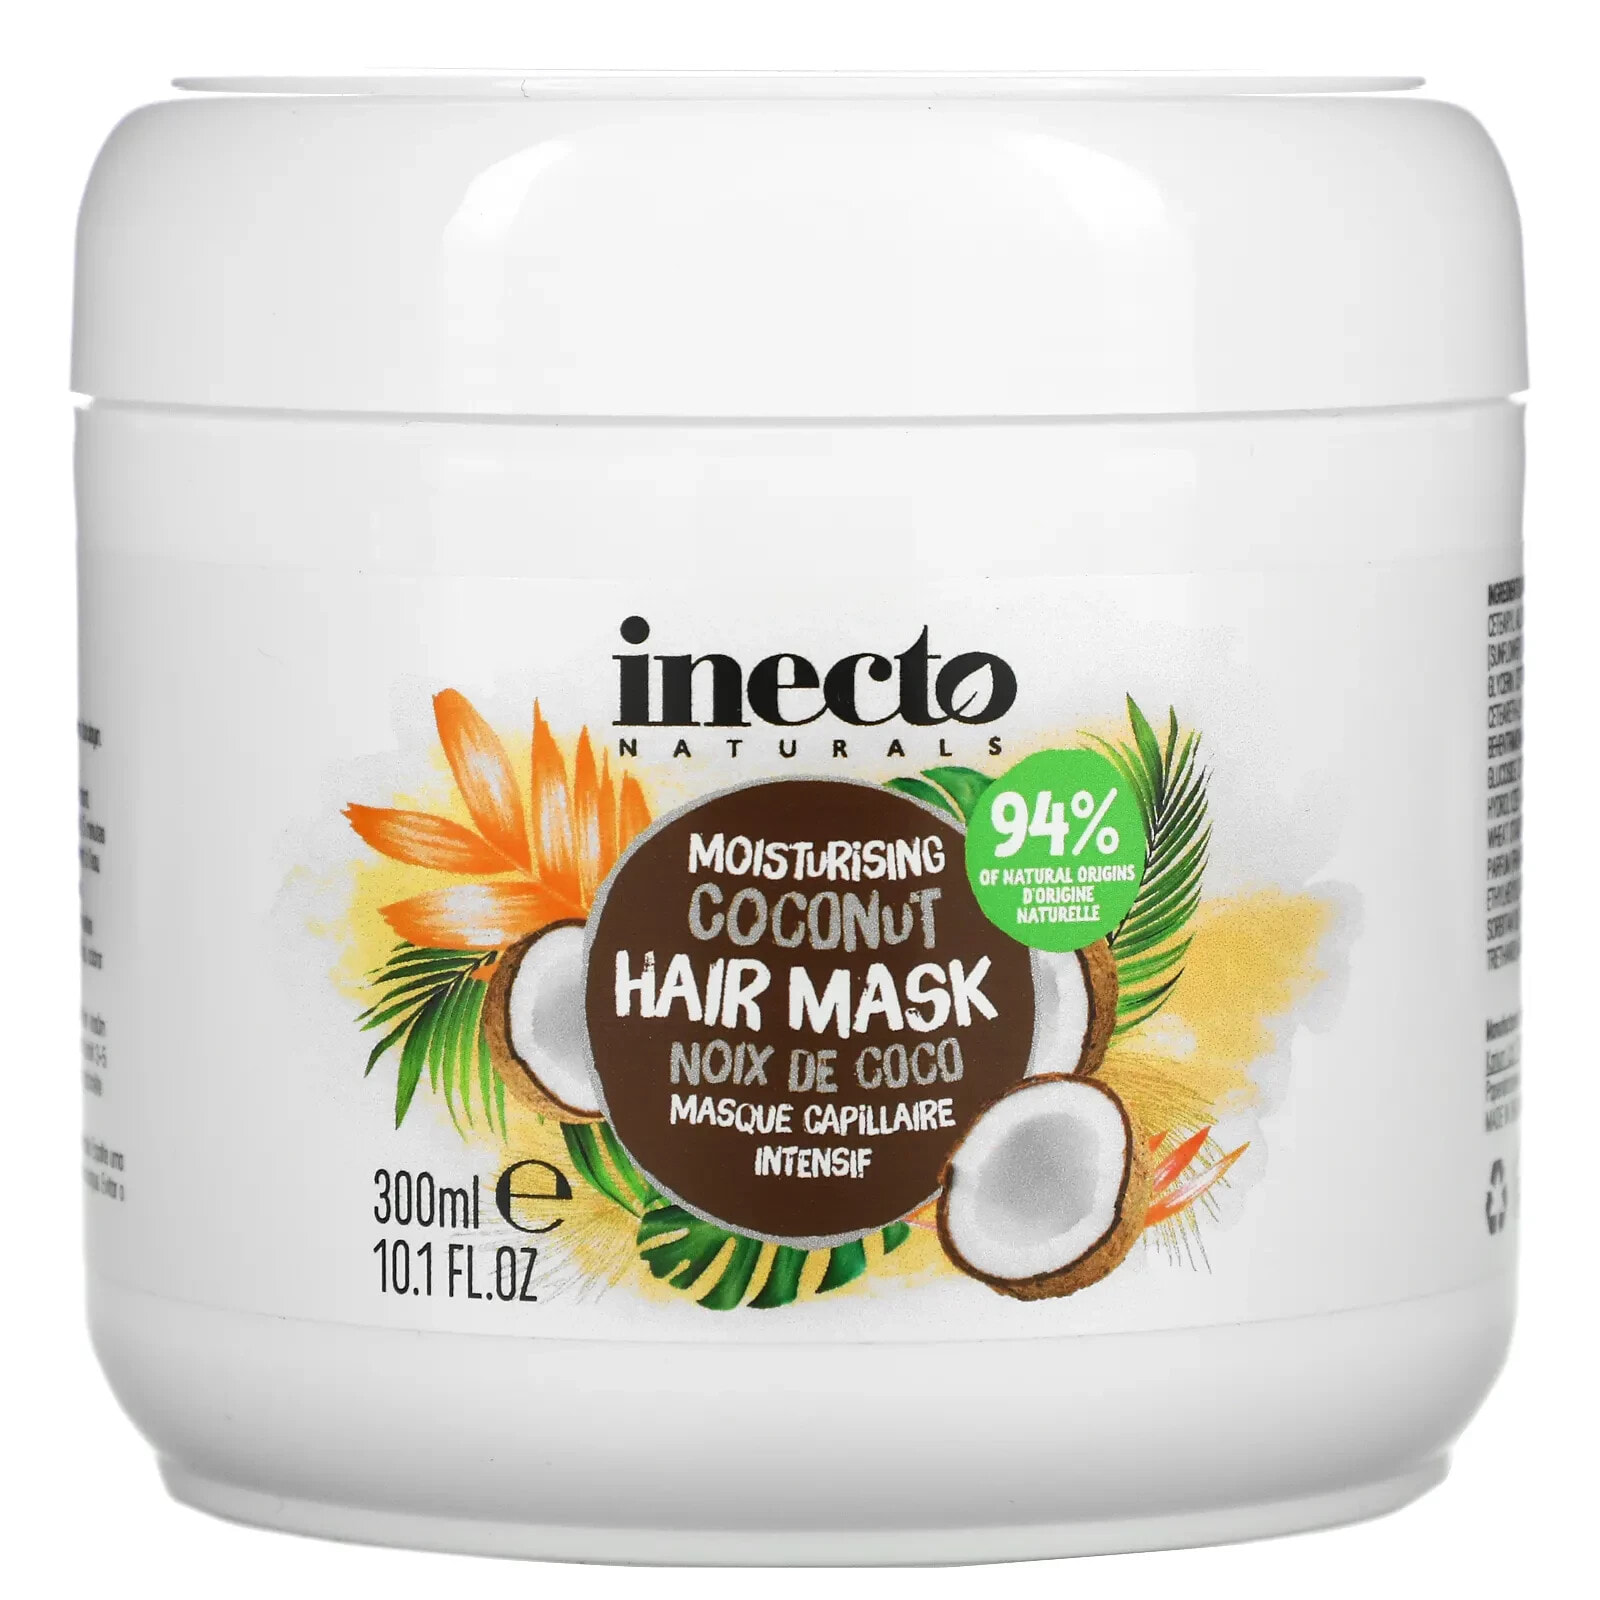 Inecto Moisturising Coconut Hair Mask Увлажняющая маска с кокосовым маслом 300 мл